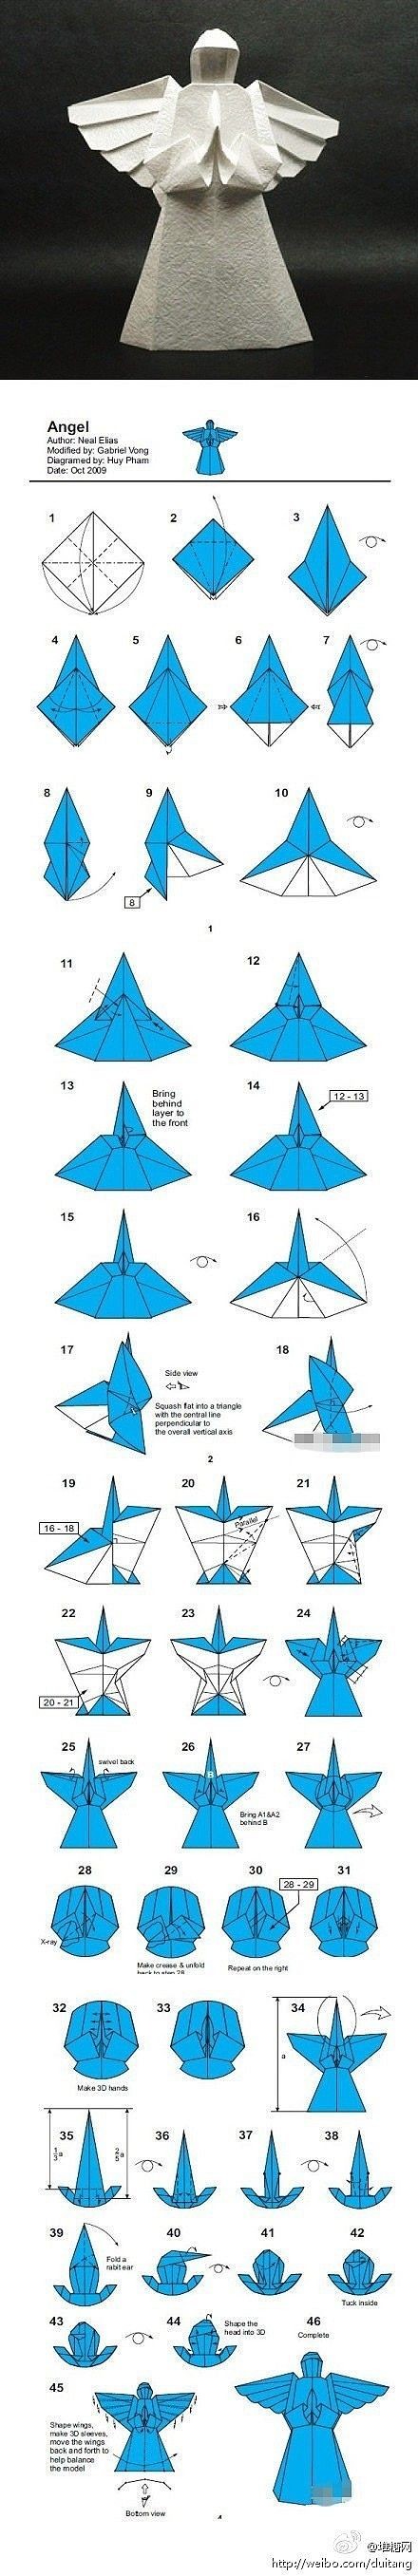 Angel origami